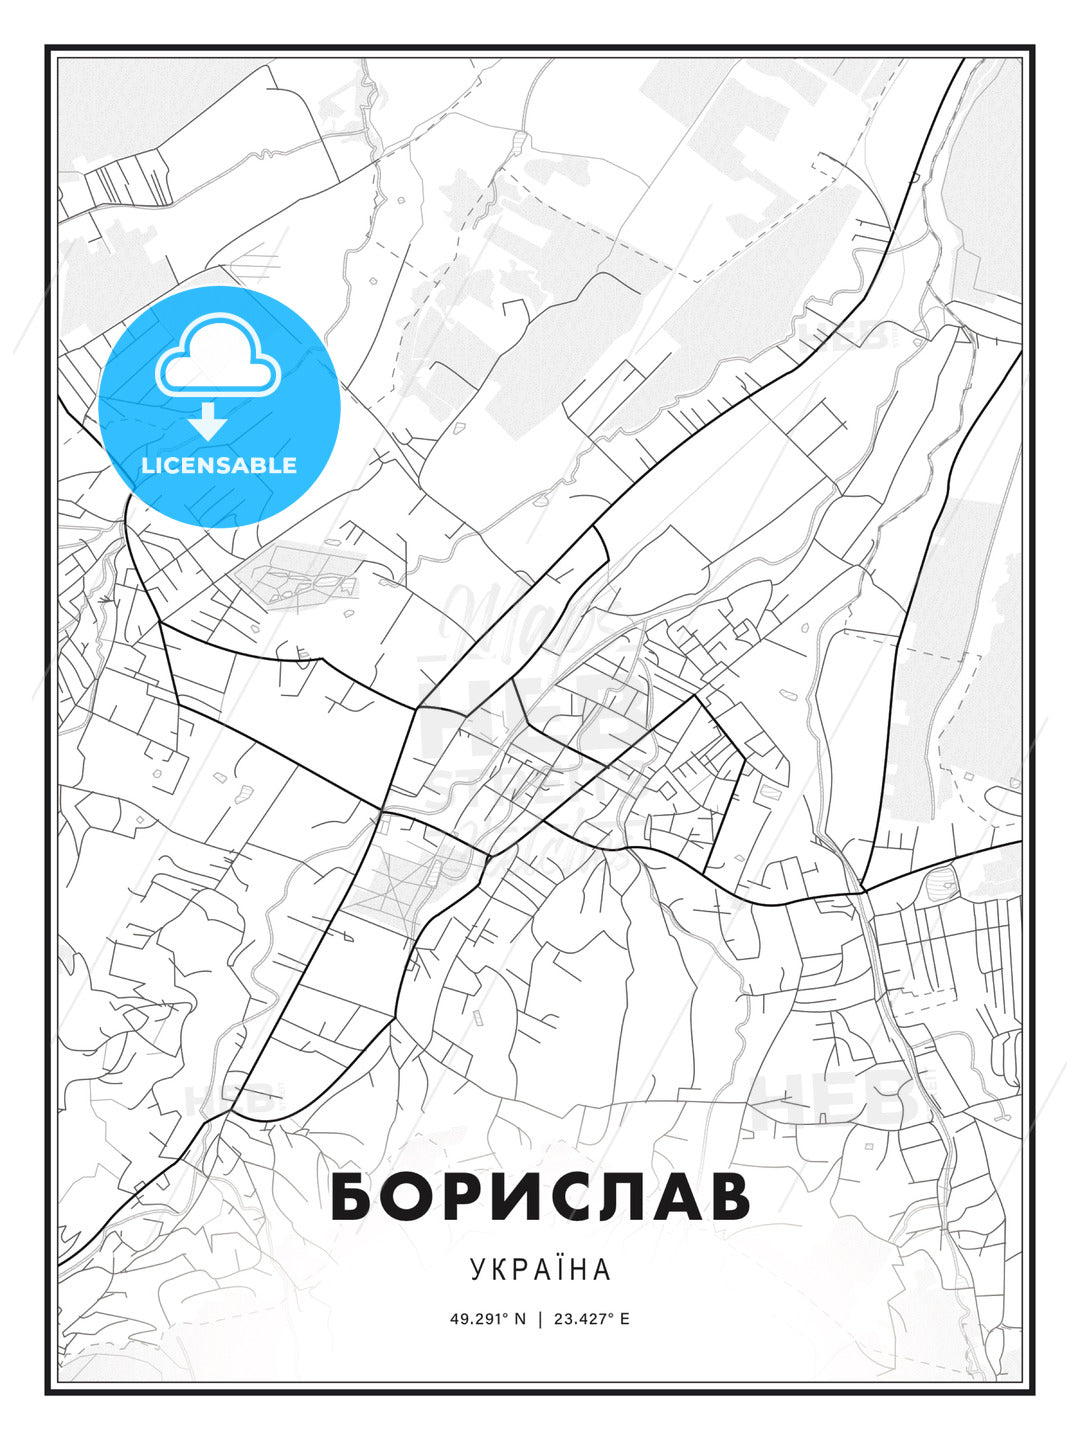 БОРИСЛАВ / Boryslav, Ukraine, Modern Print Template in Various Formats - HEBSTREITS Sketches